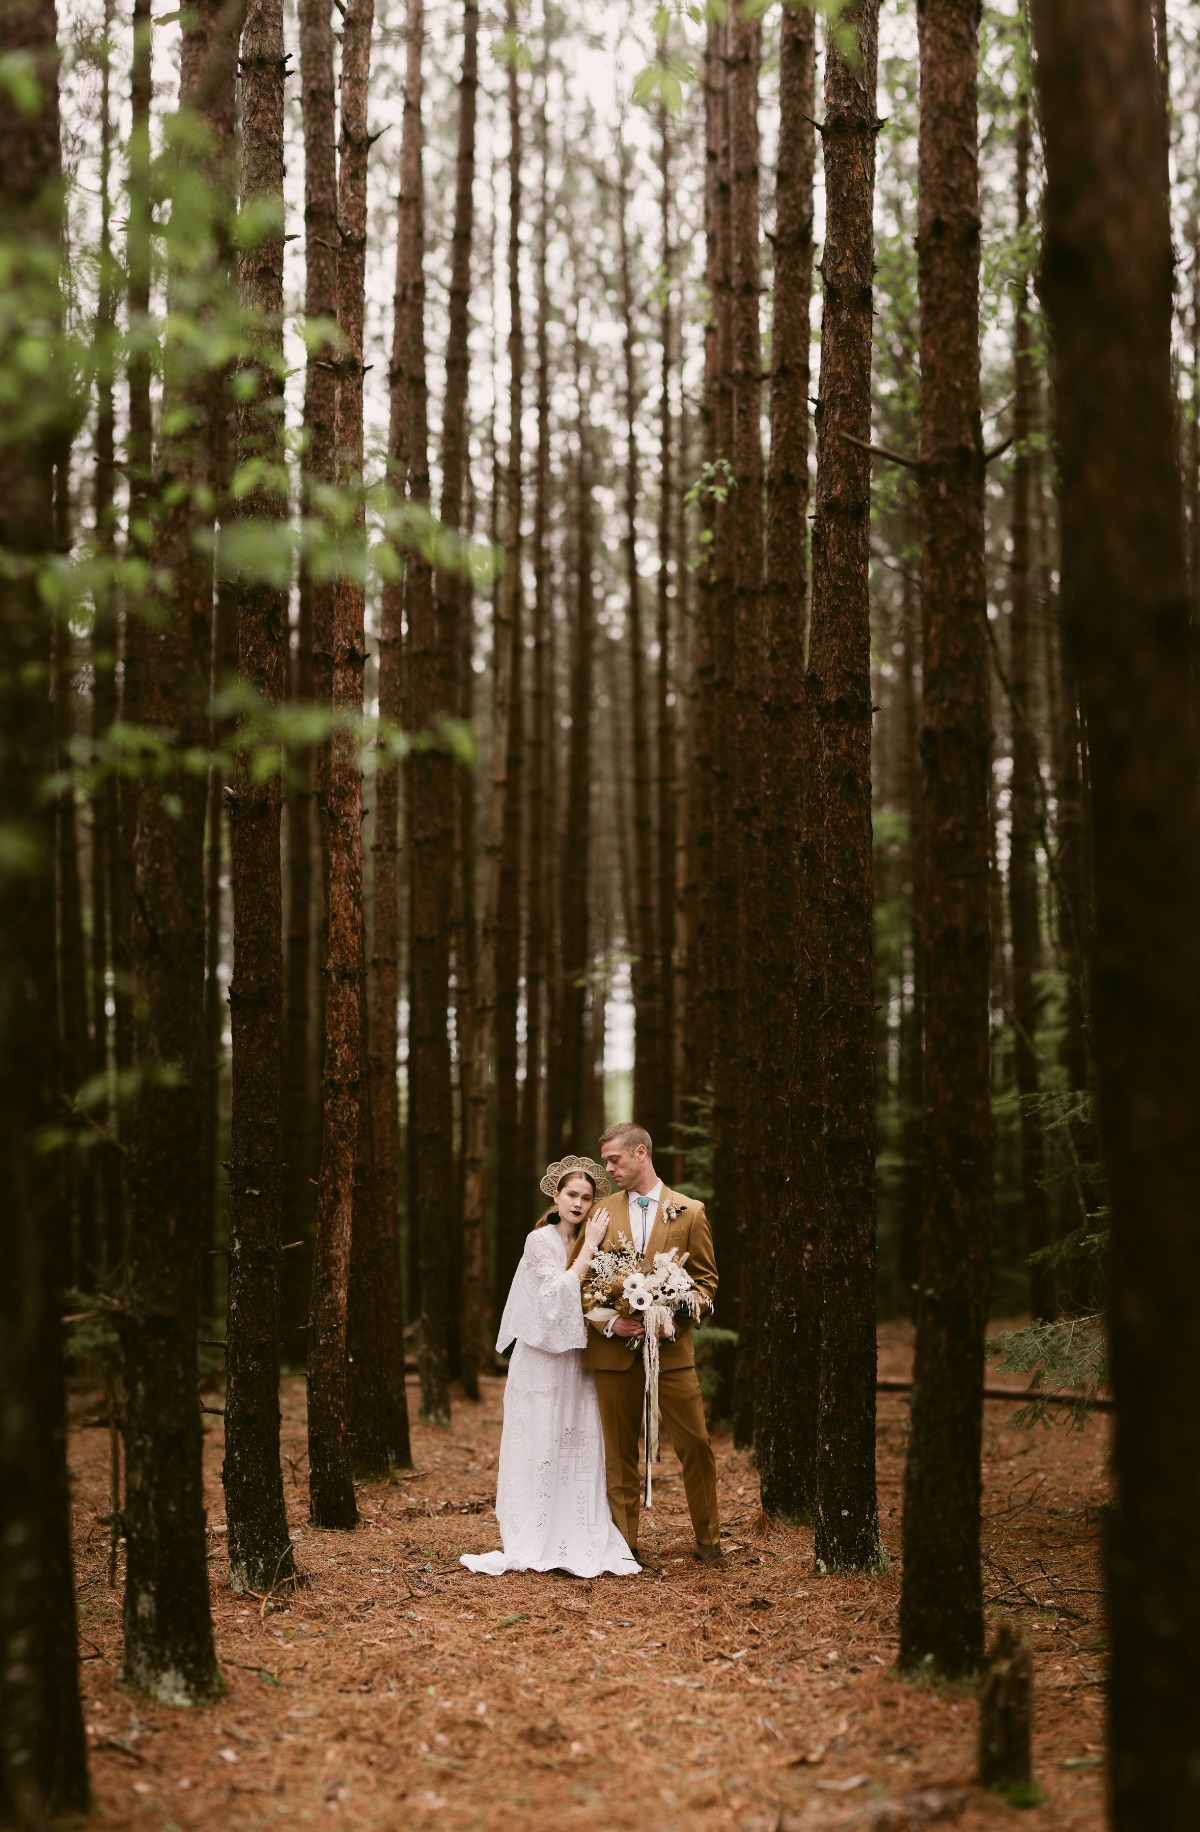 outdoor couple pose ideas for wedding photography